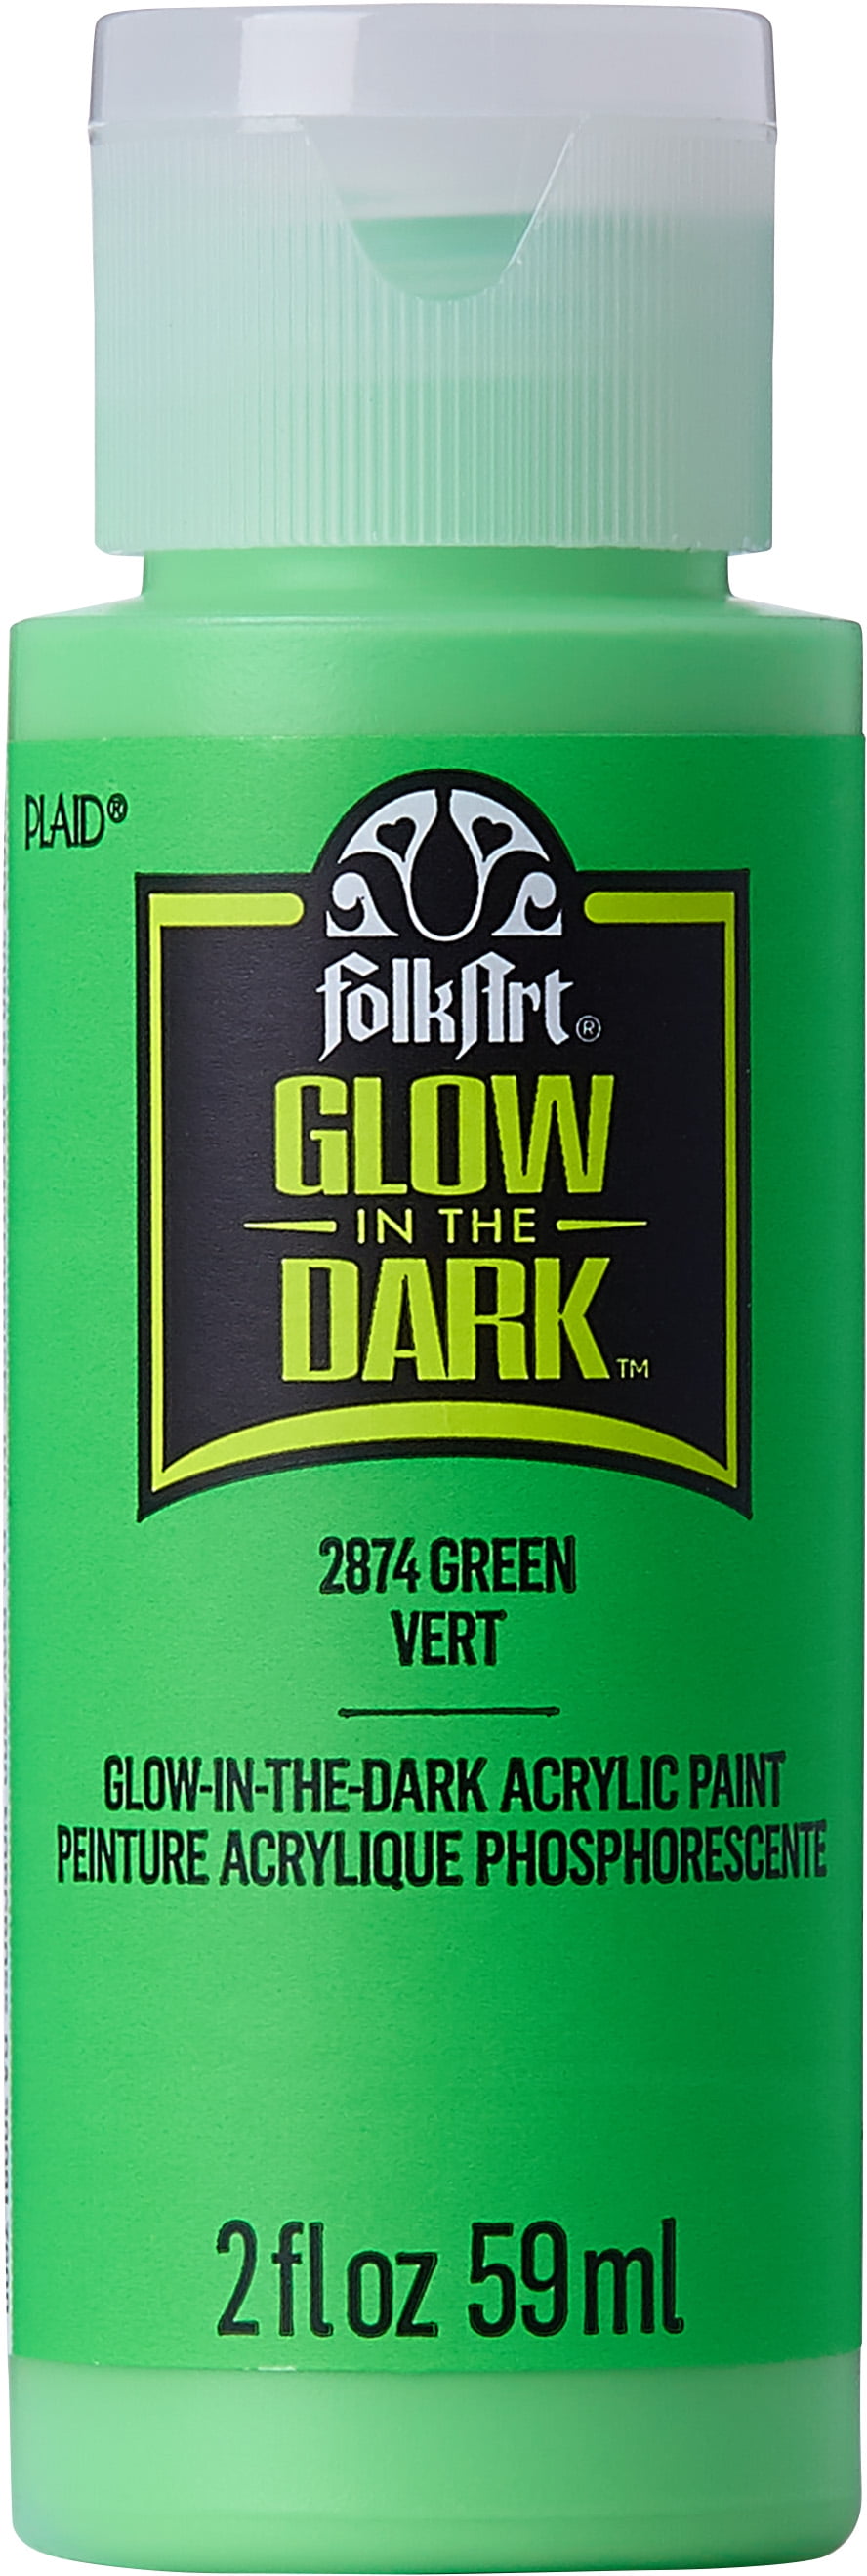 FolkArt Glow-in-the-Dark Acrylic Craft Paint, Matte Finish, Green, 2 fl oz  